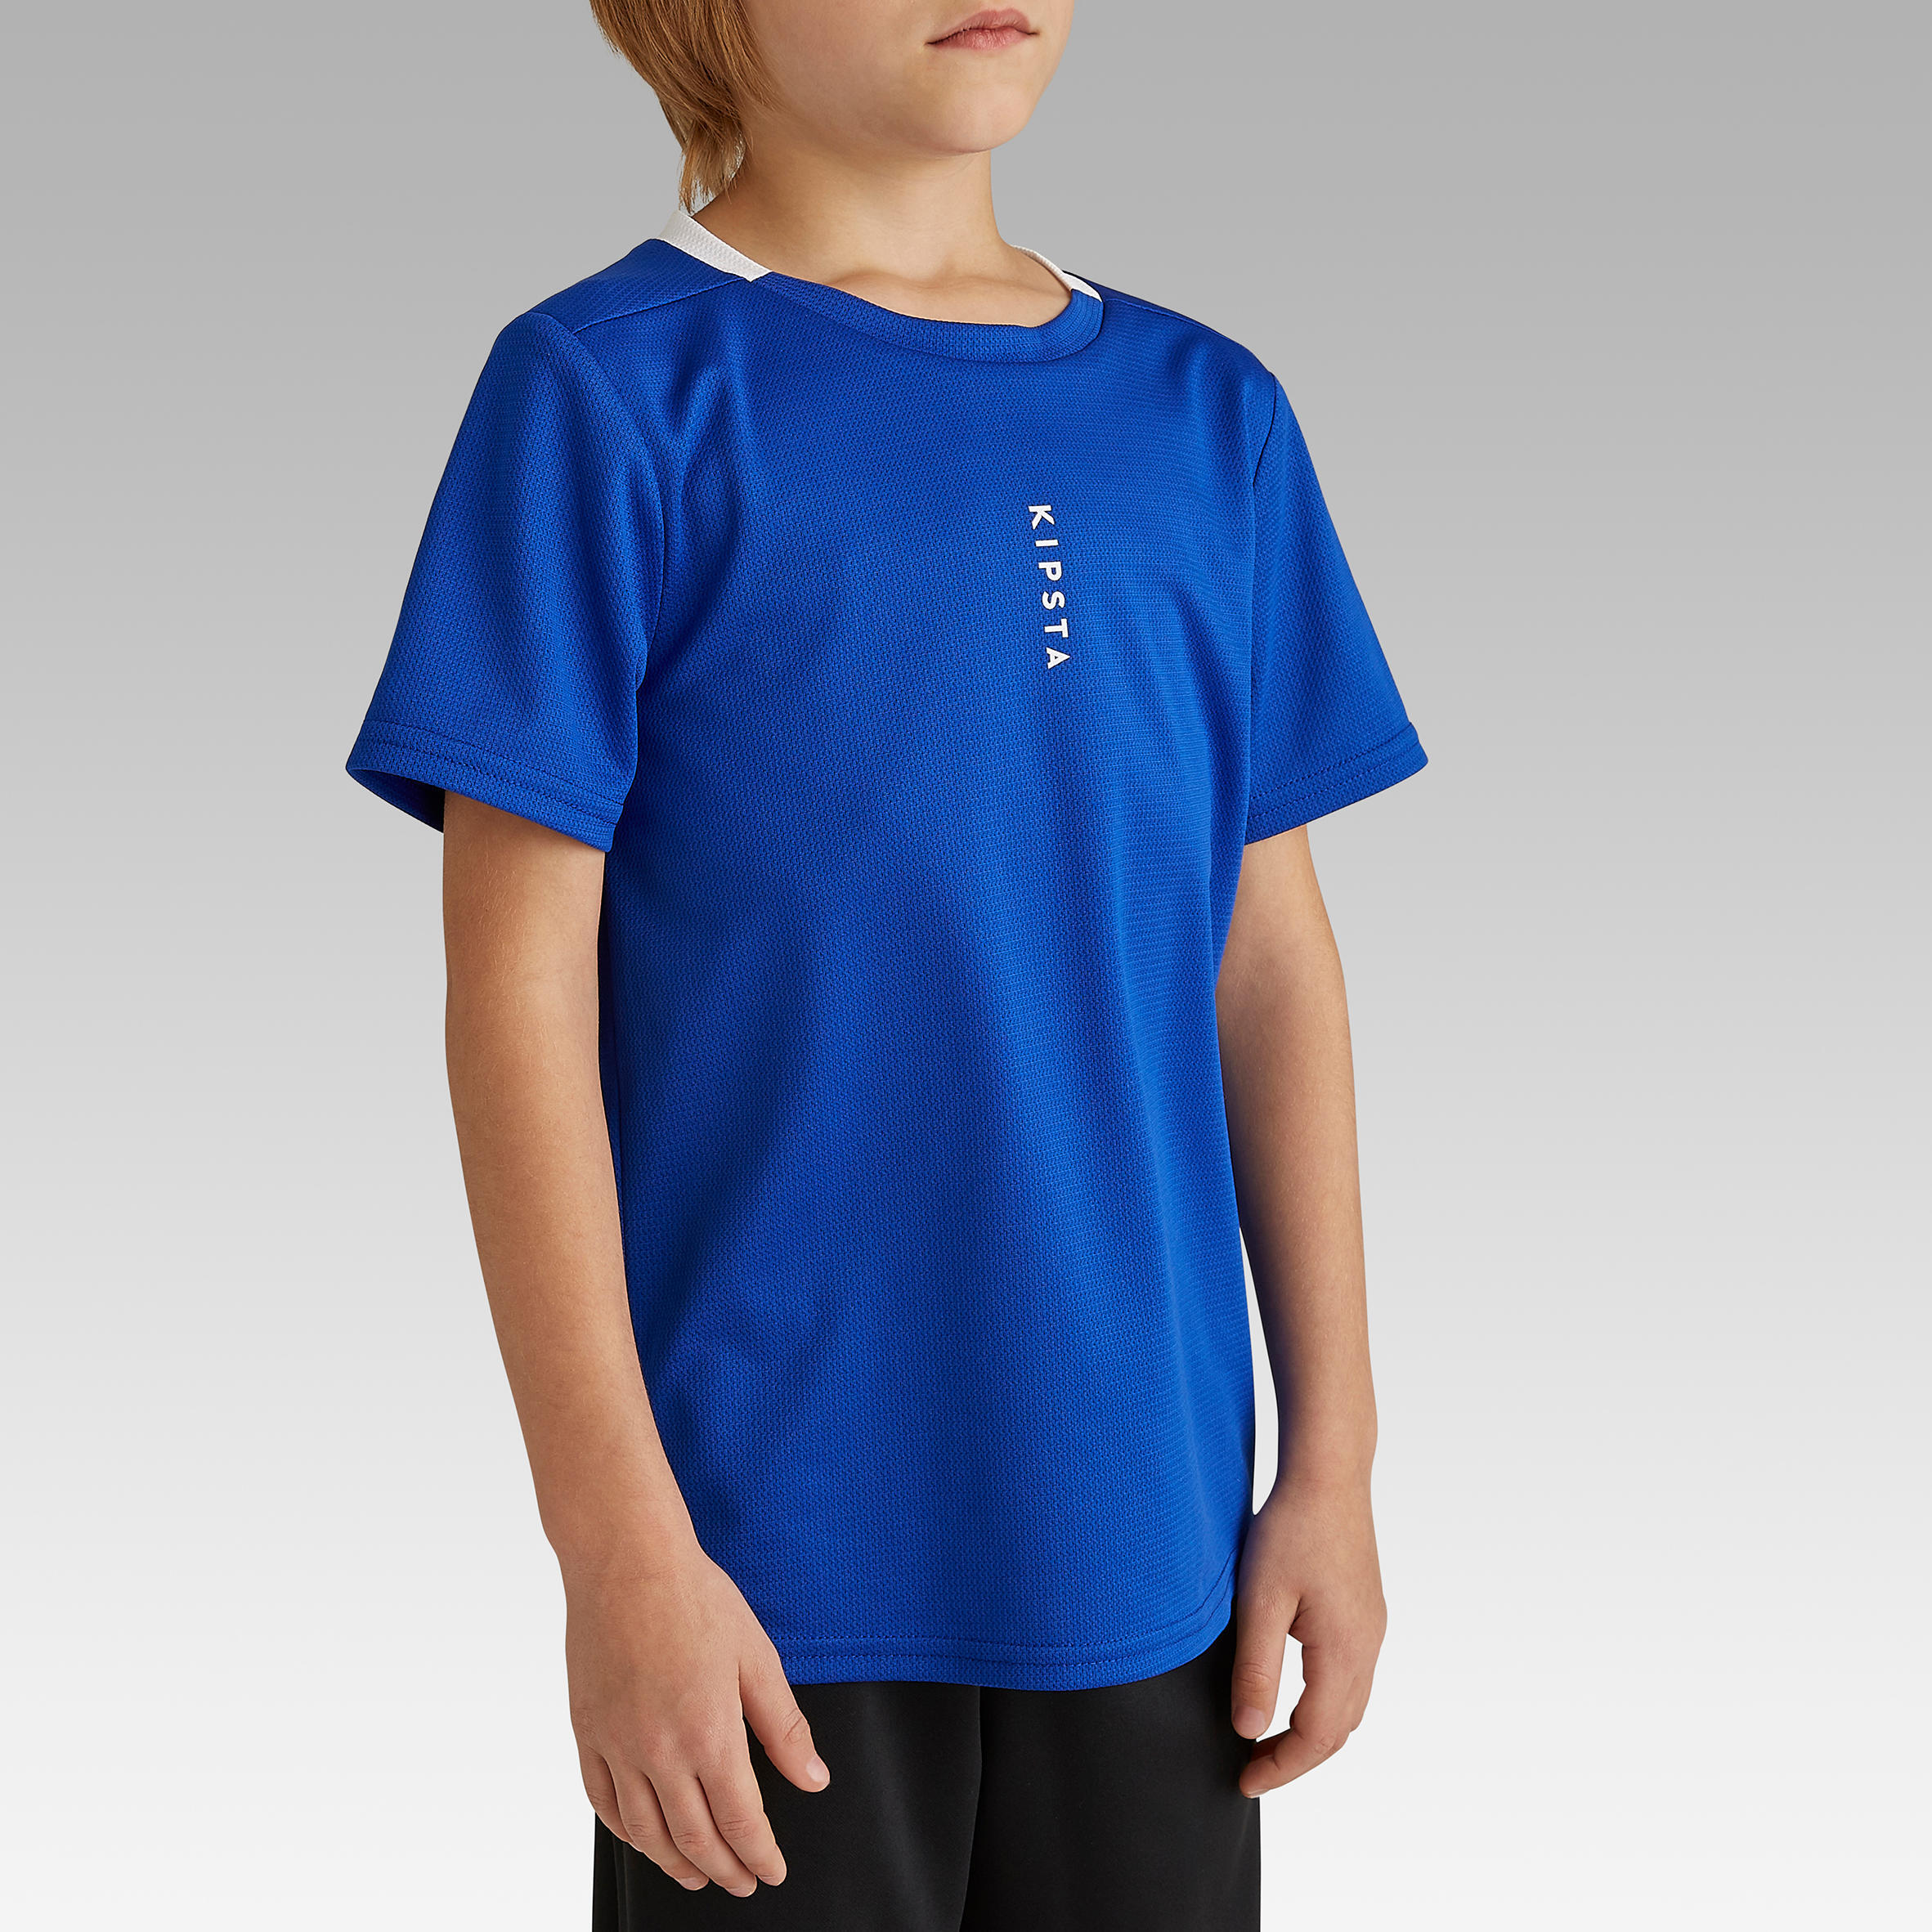 F100 Kids' Football Shirt - Indigo Blue 3/8